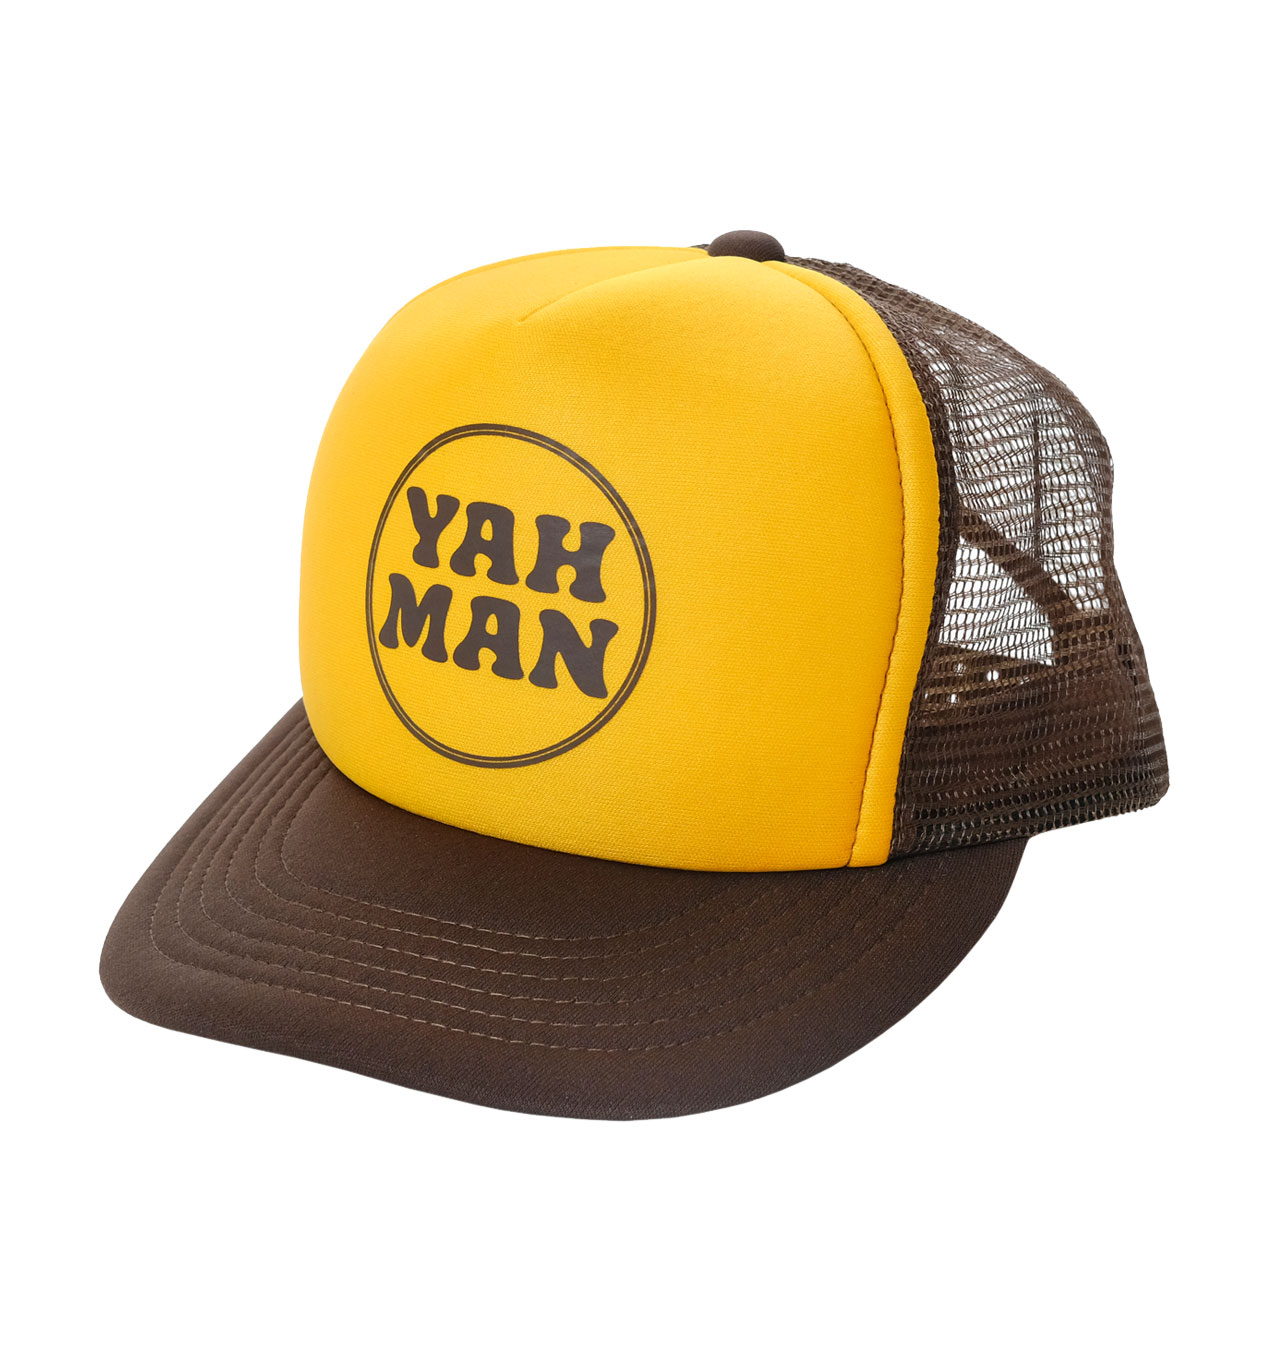 Eat-Dust---Yah-Man-Trucker-Cap---Brown-Yellow-66